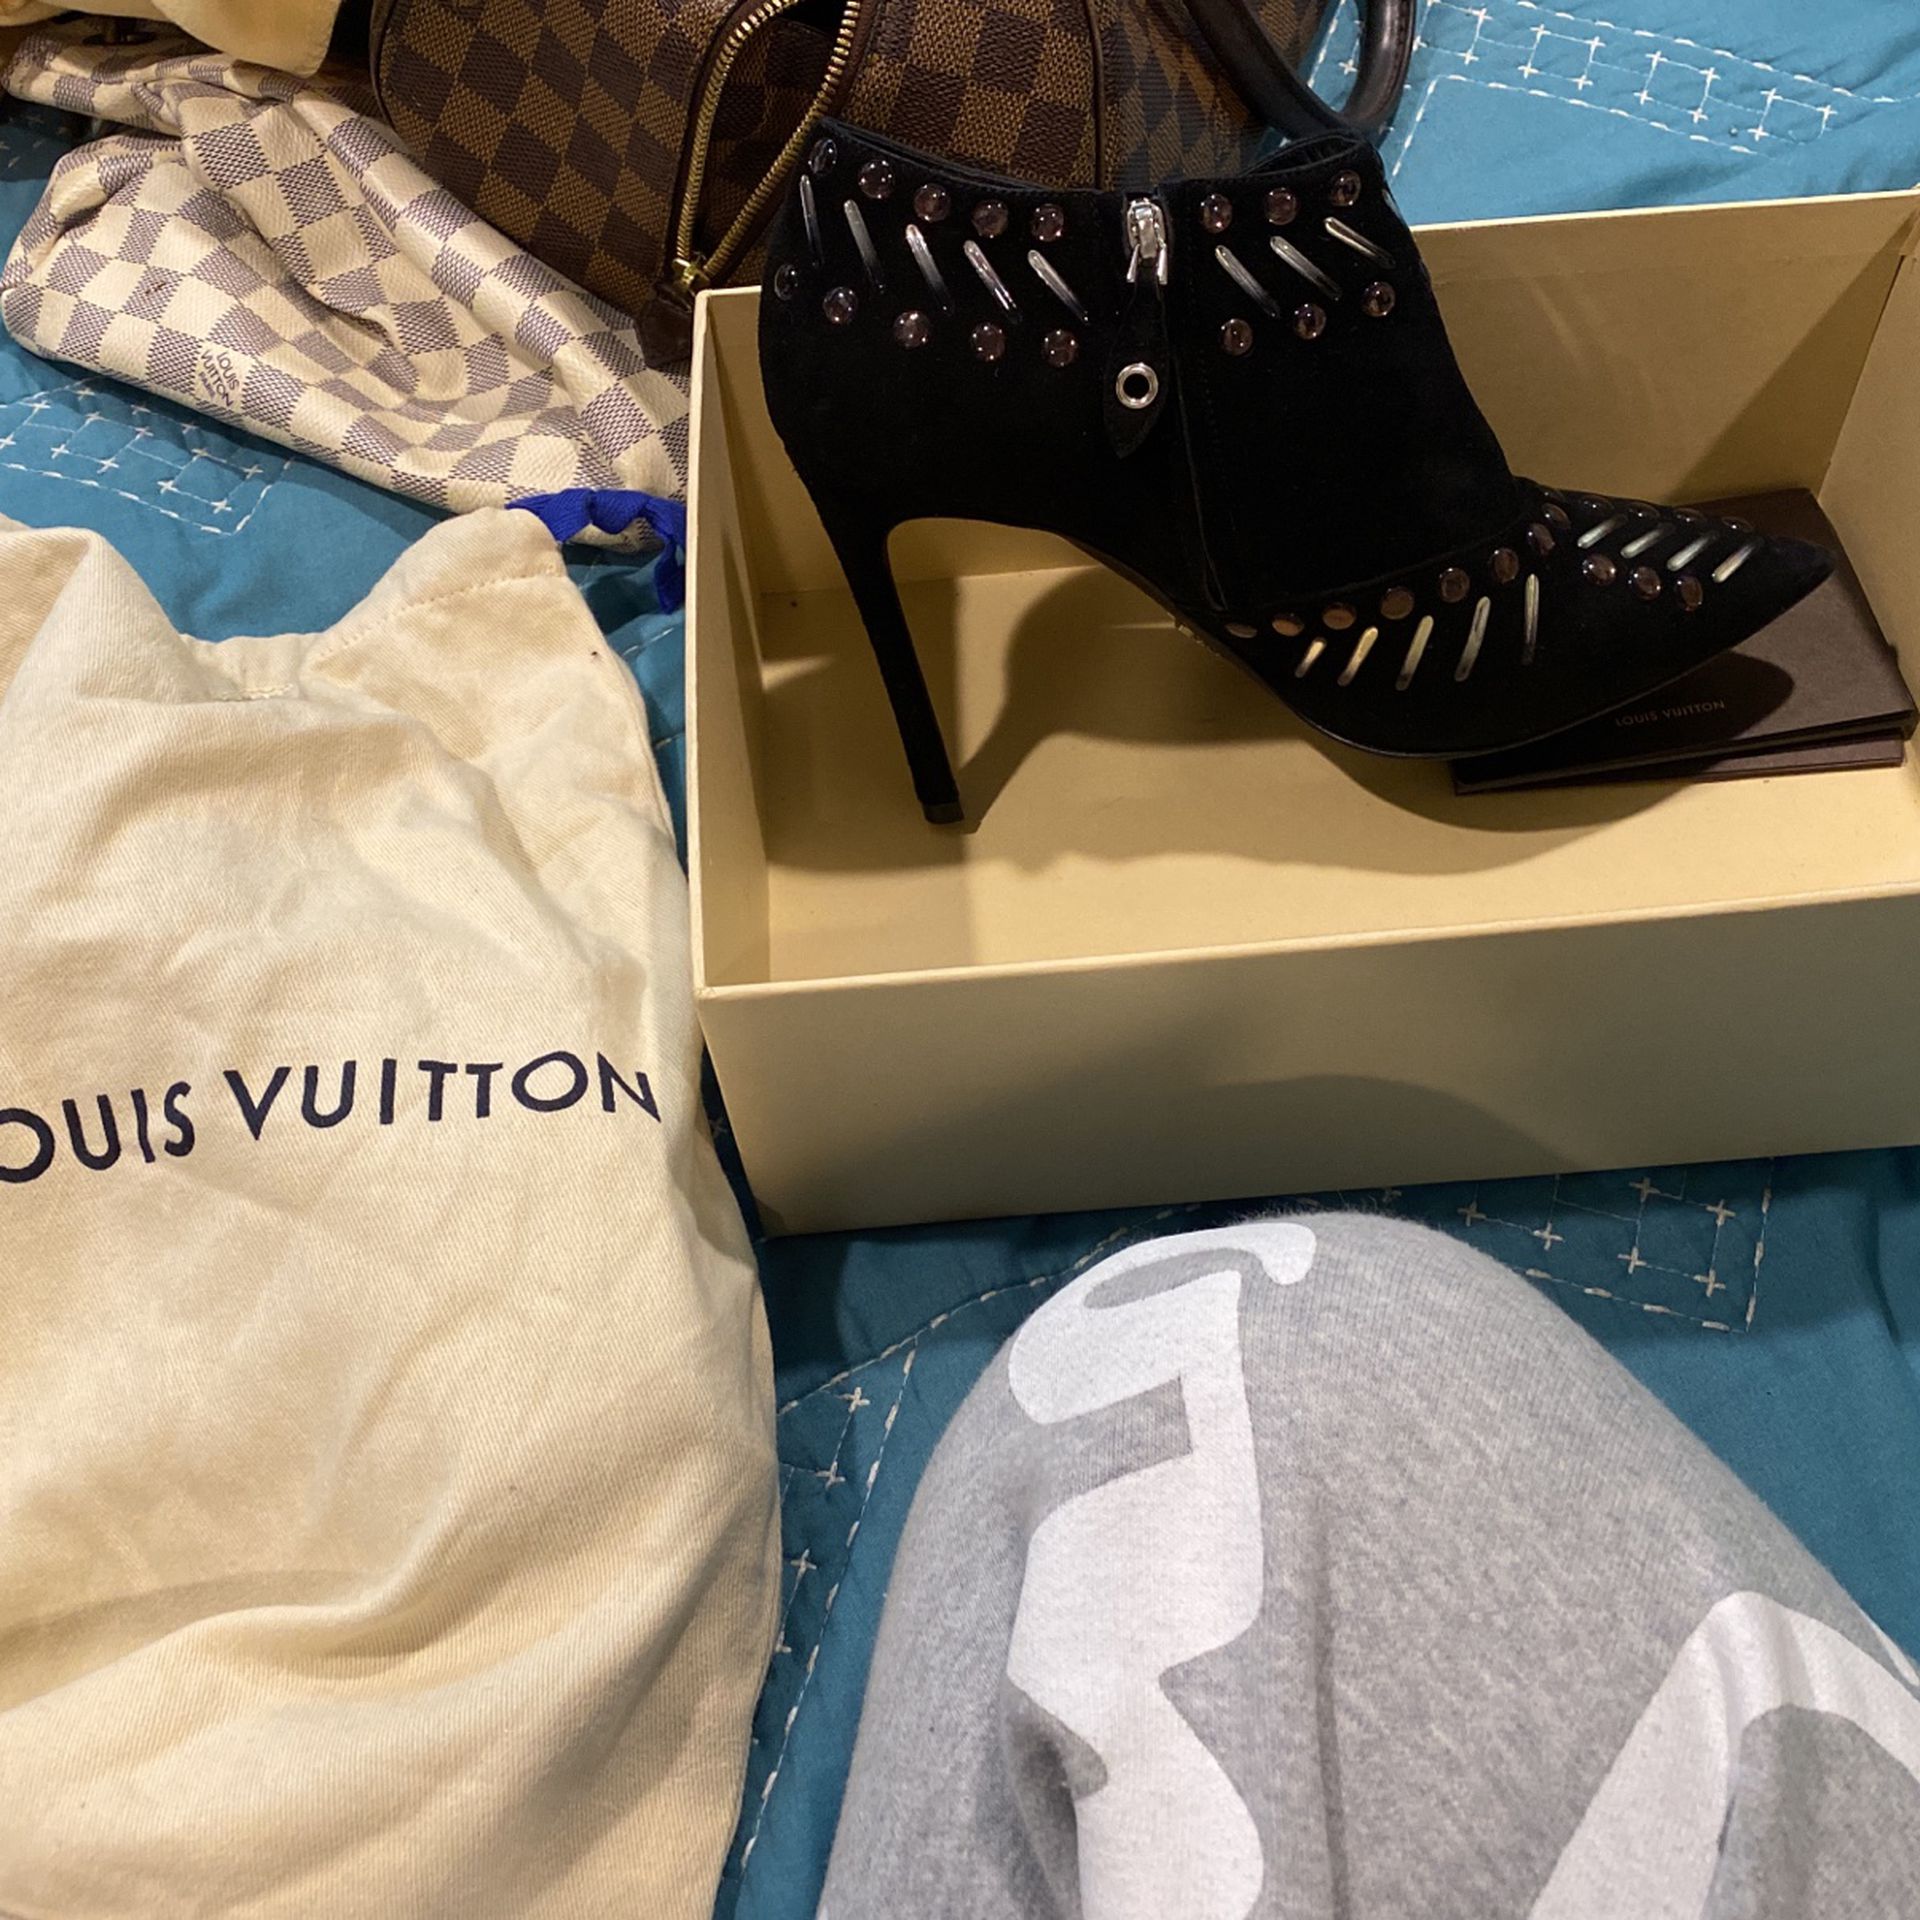 Louis Vuitton Wonderland Boots for Sale in Huntington Beach, CA - OfferUp